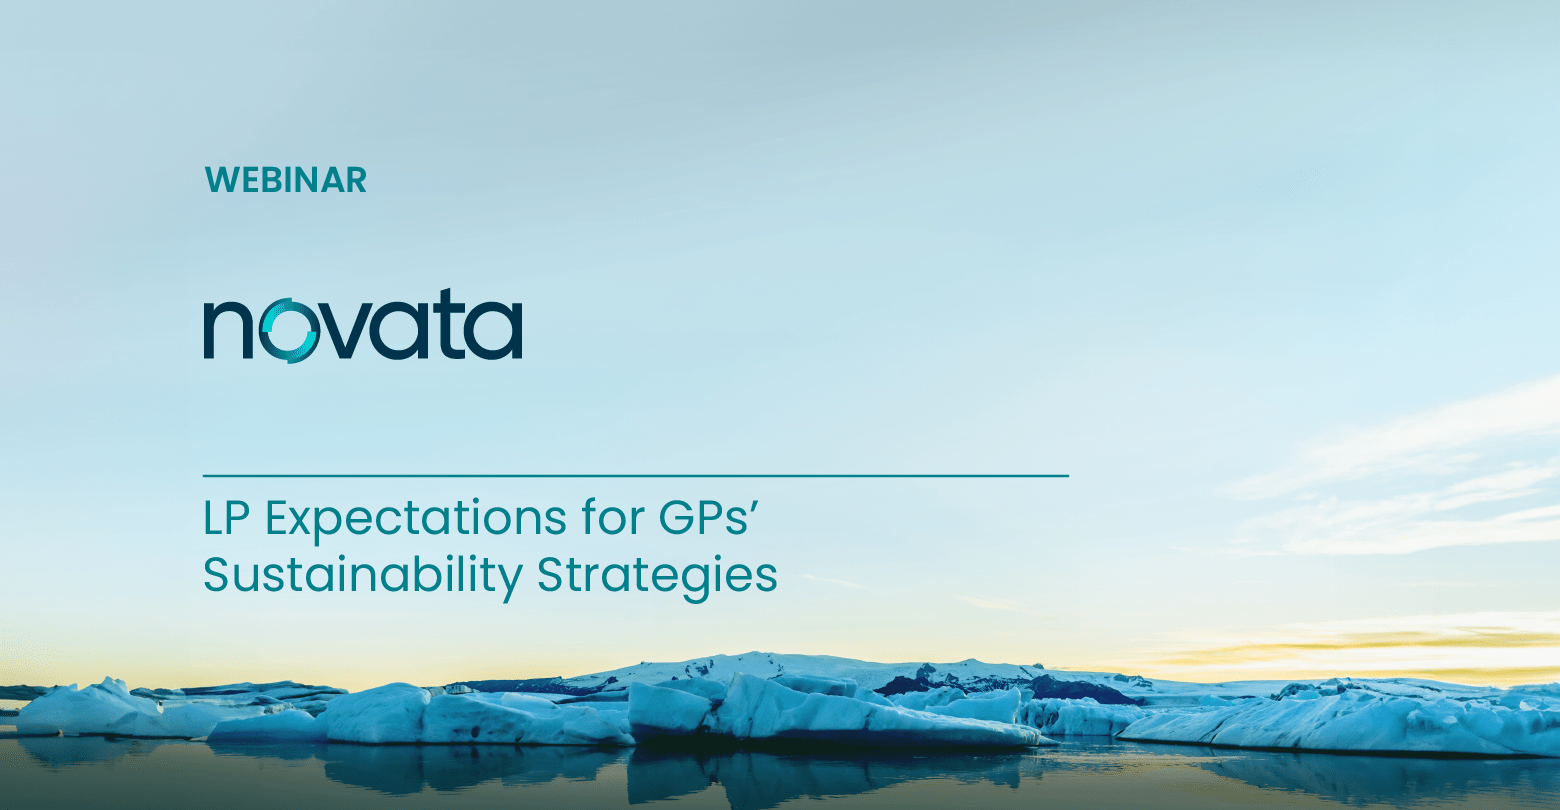 Novata Webinar: LP Expectations for GPs' Sustainability Strategies